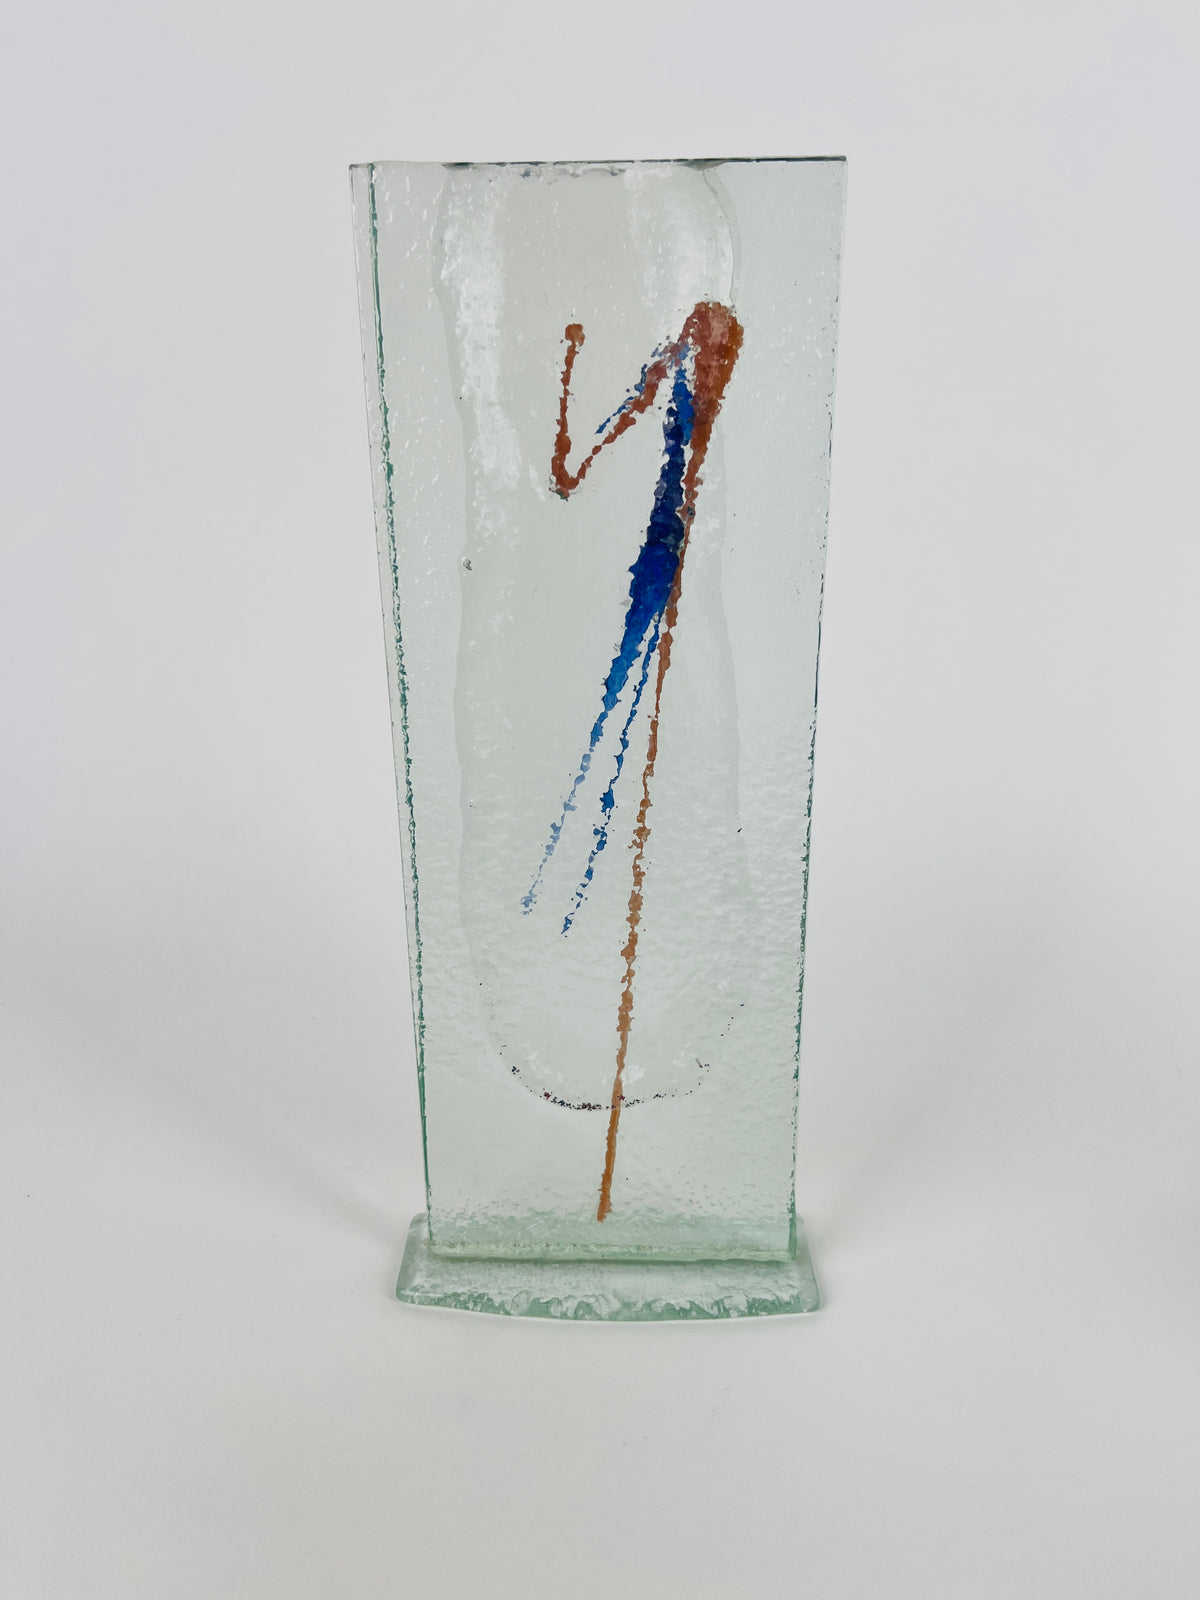 Vintage Handmade Glass Vase